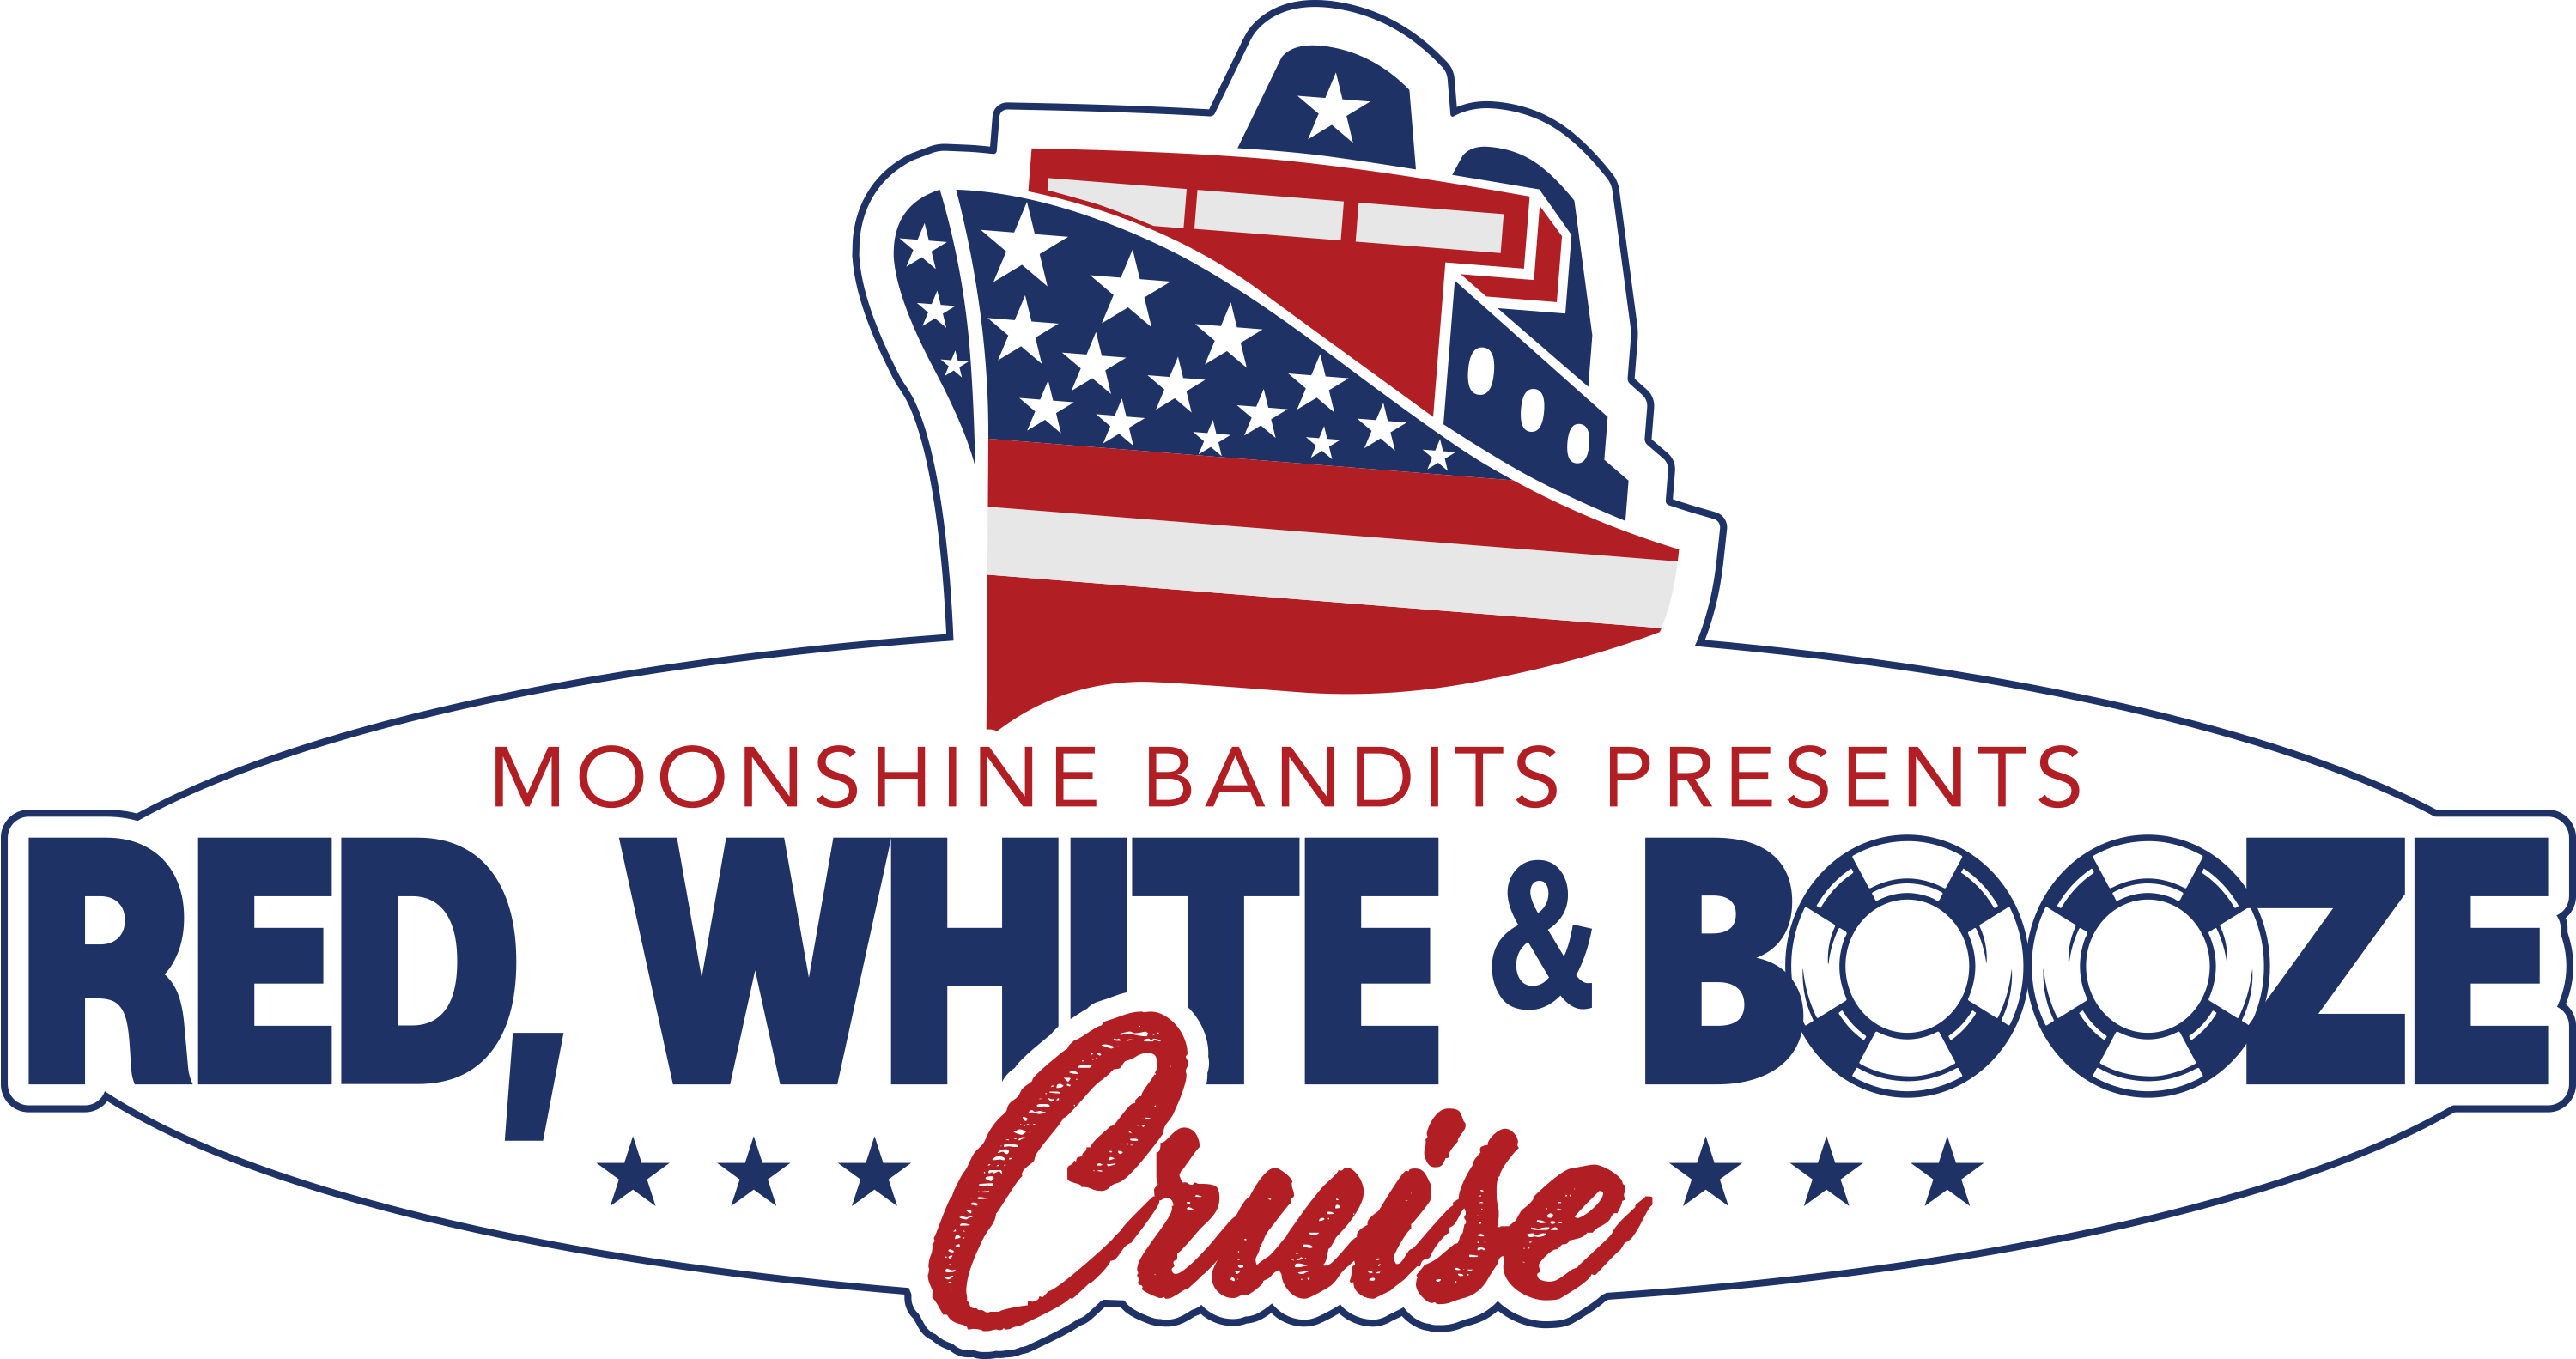 Moonshine Bandits Red, White & Booze Cruise